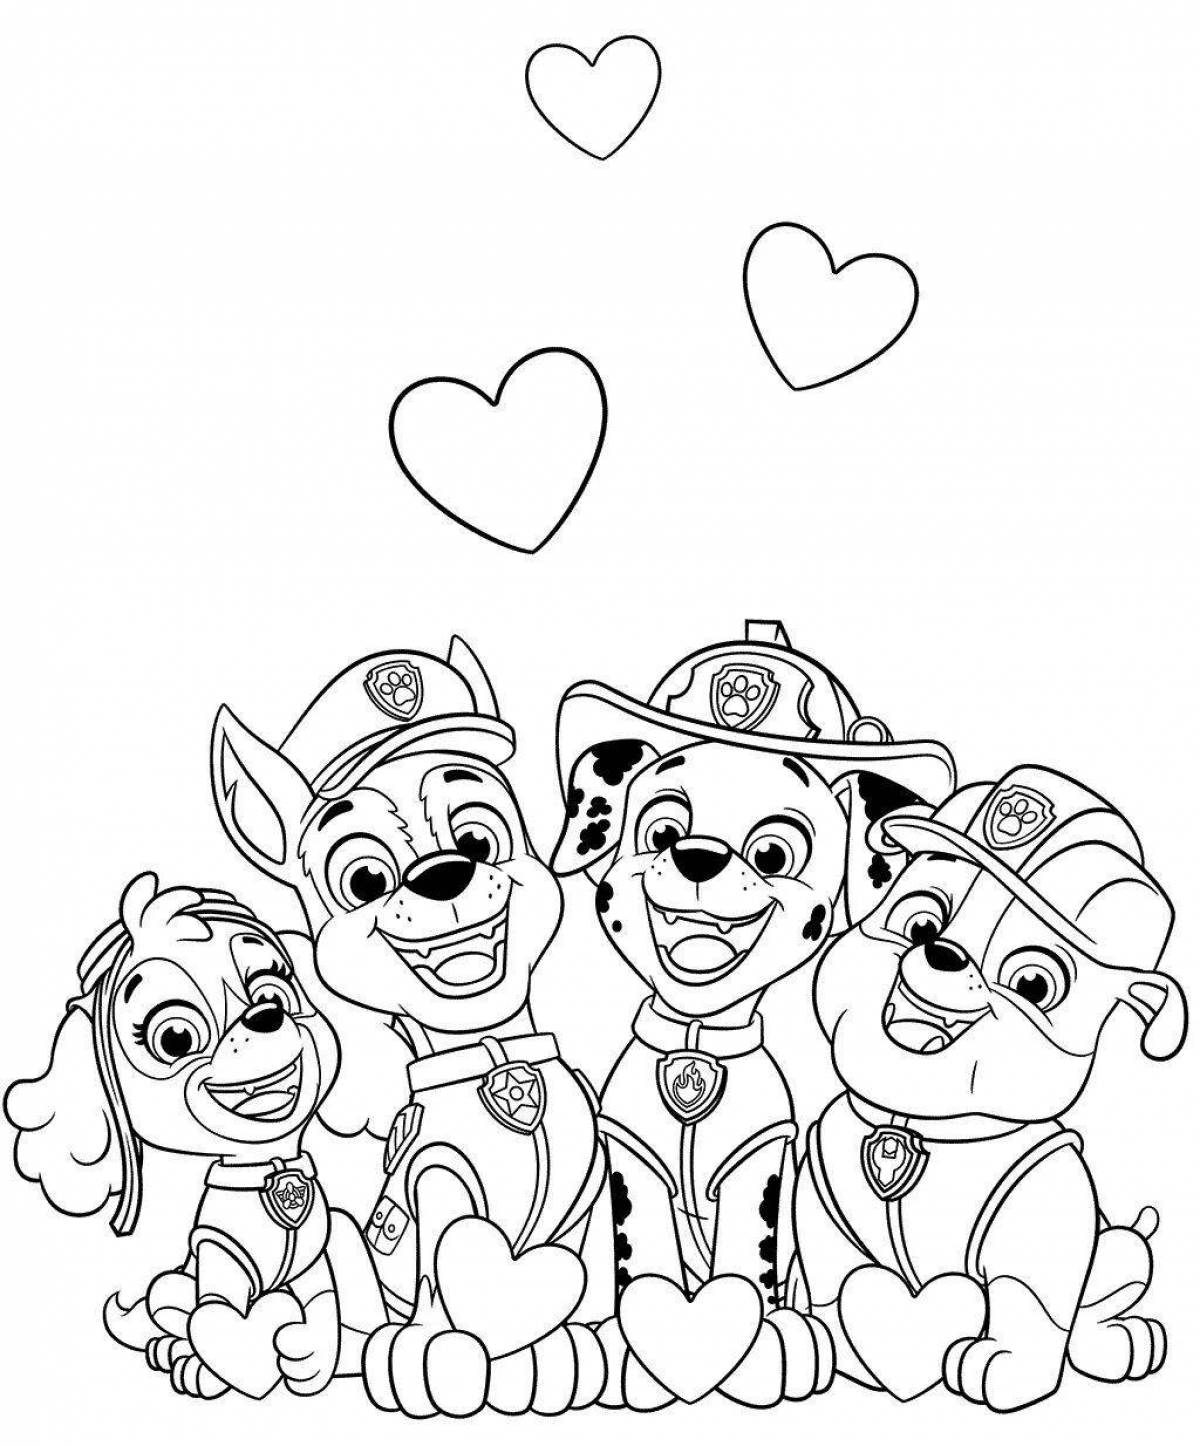 Paw Patrol fun coloring page